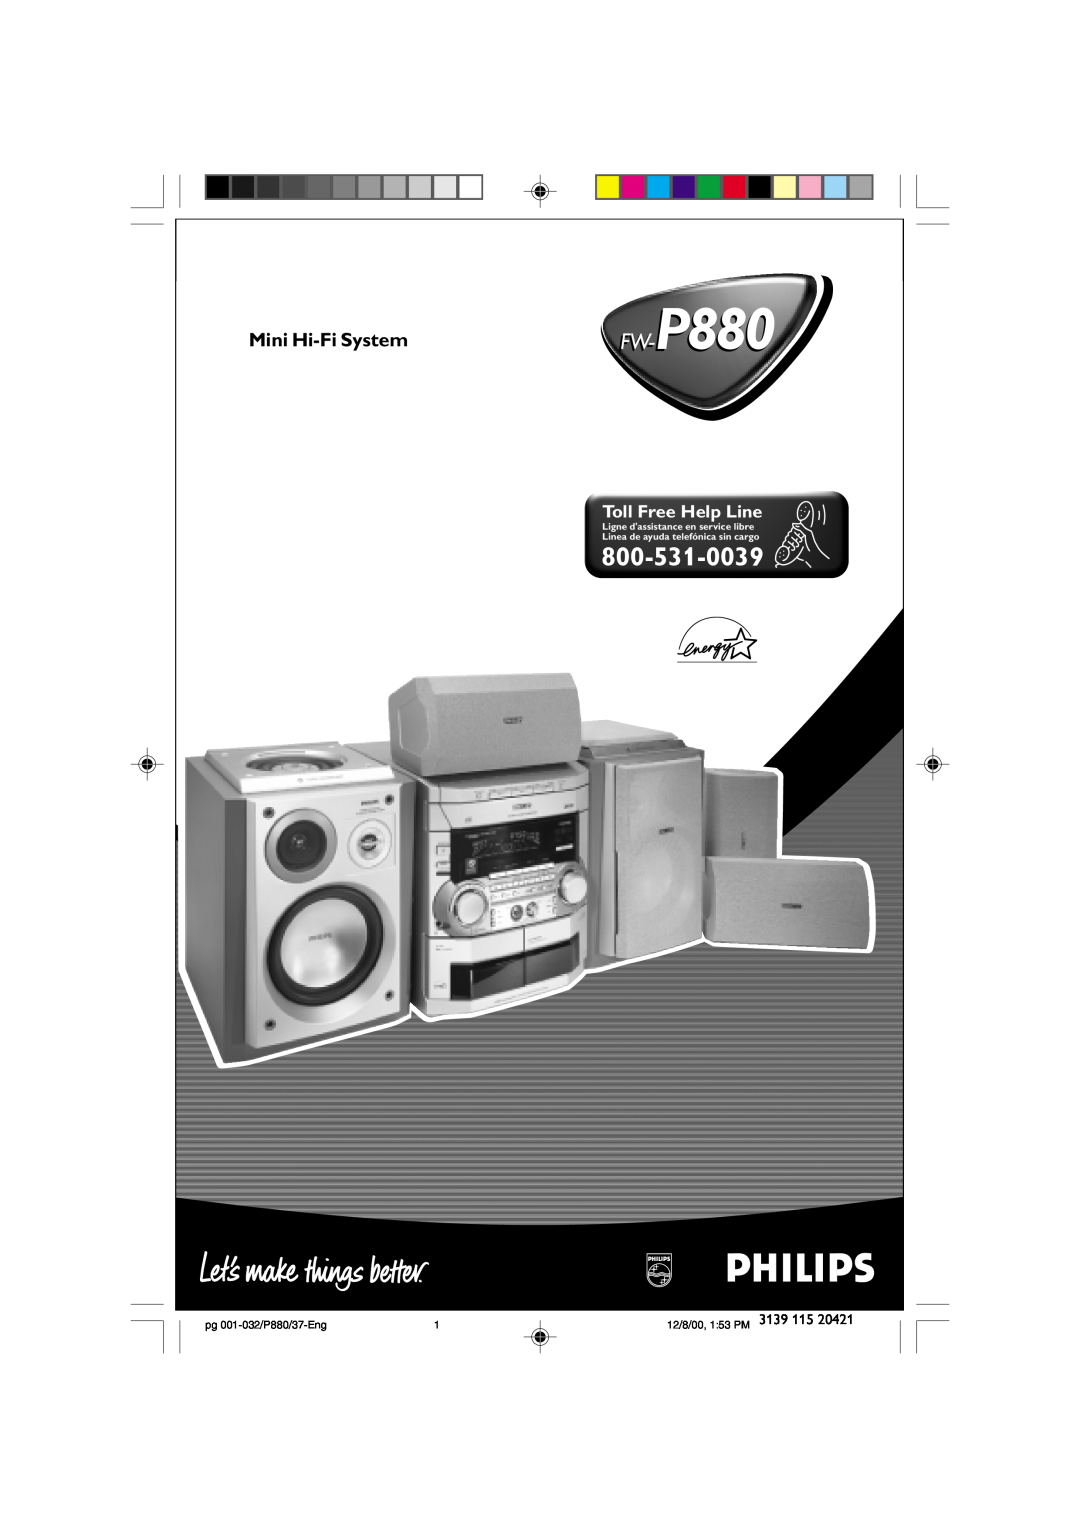 Philips manual Mini Hi-Fi System, FW -P880, Toll Free Help Line, pg 001-032/P880/37-Eng, 12/8/00, 153 PM 